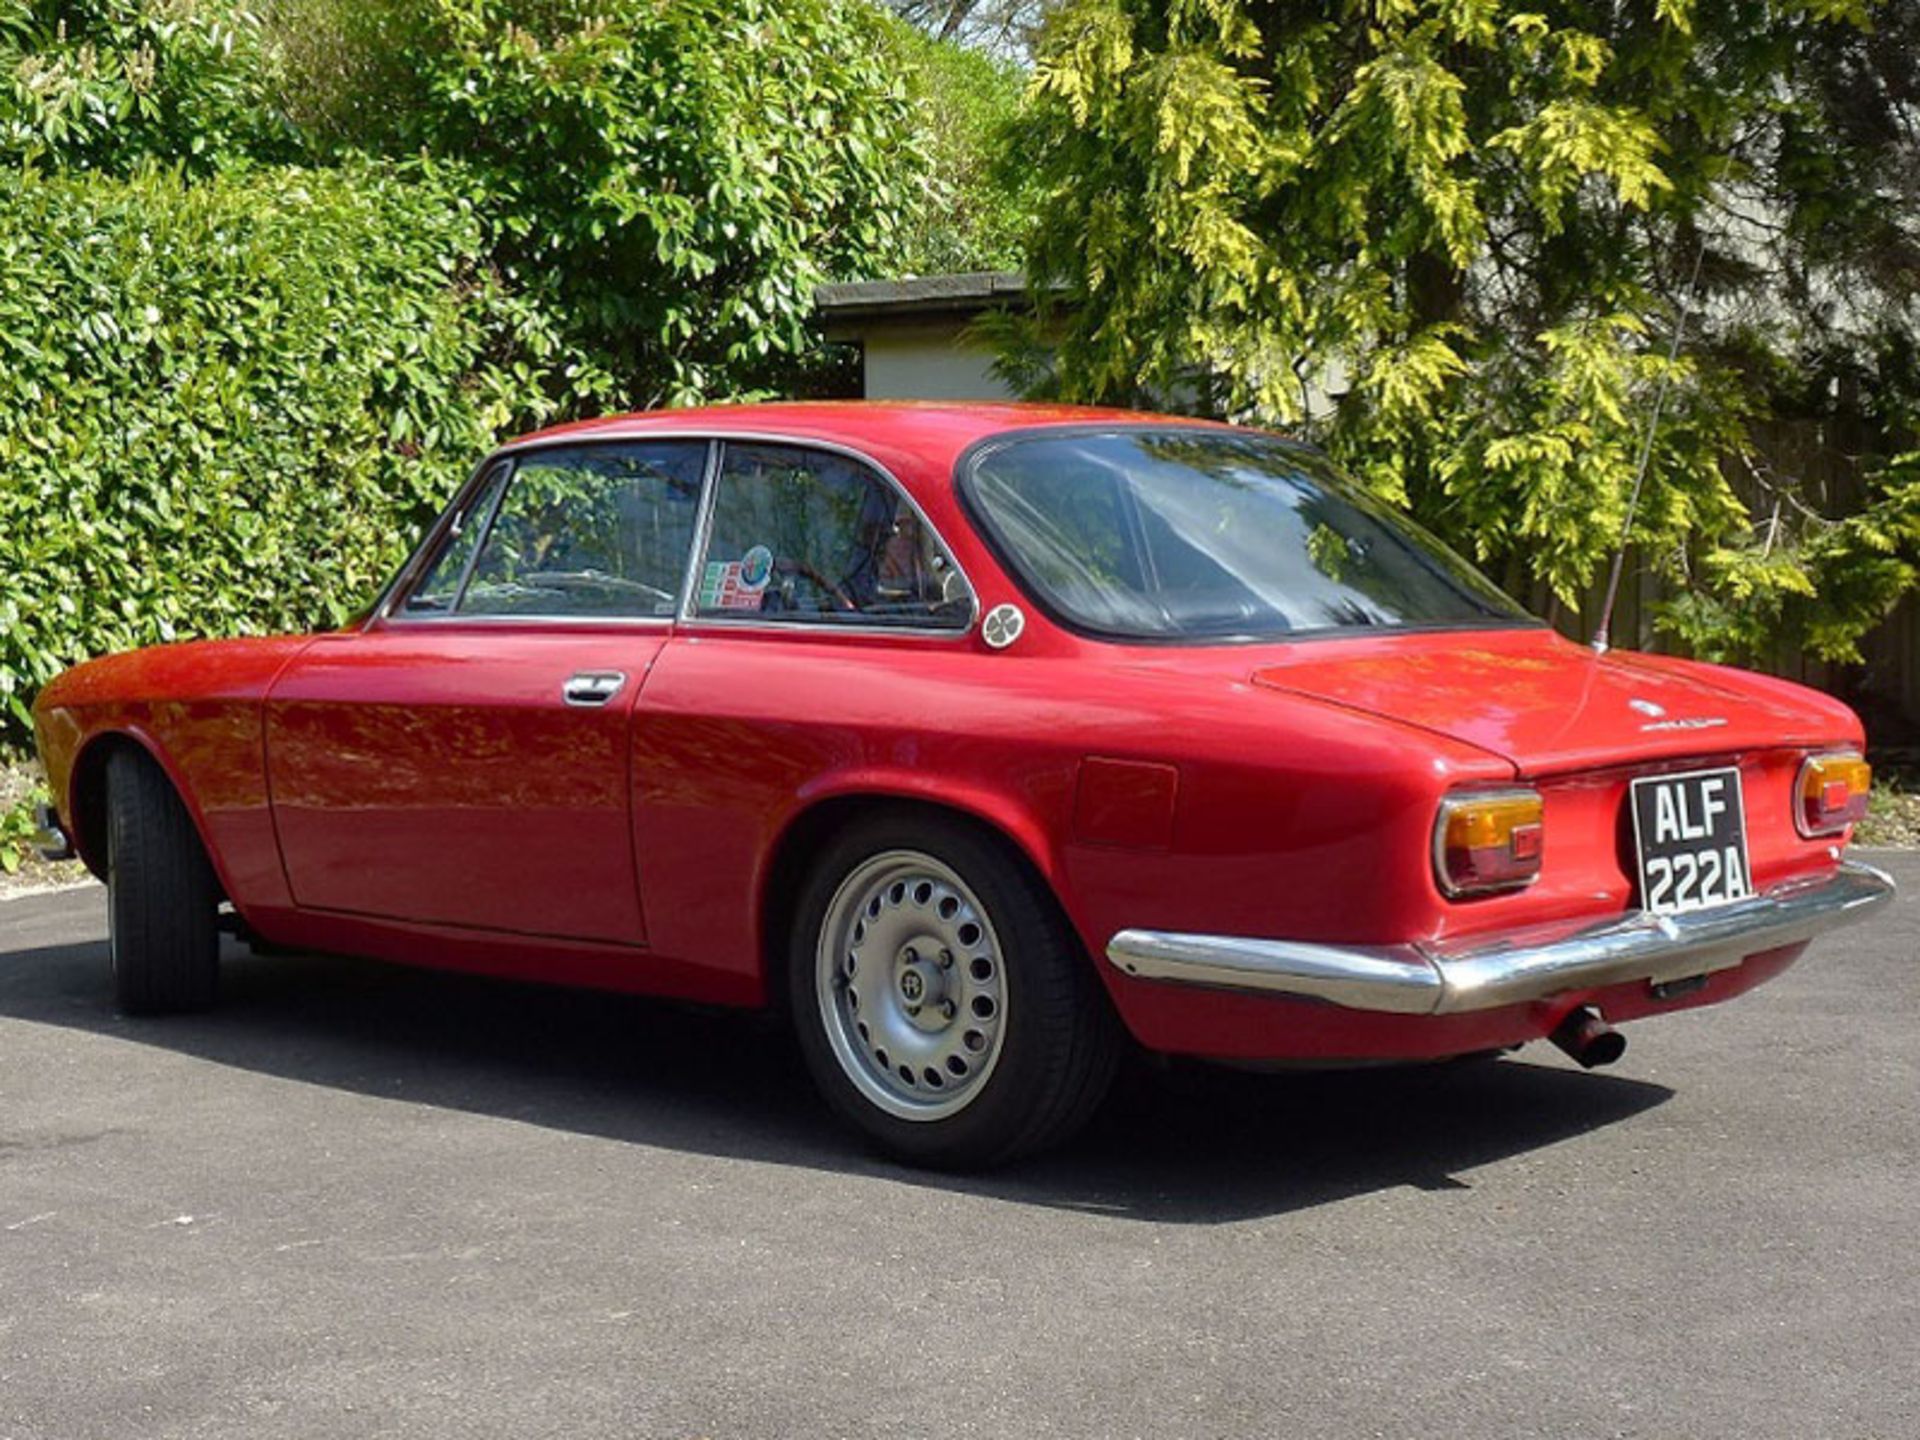 1968 Alfa Romeo 1750 GTV - Image 3 of 7